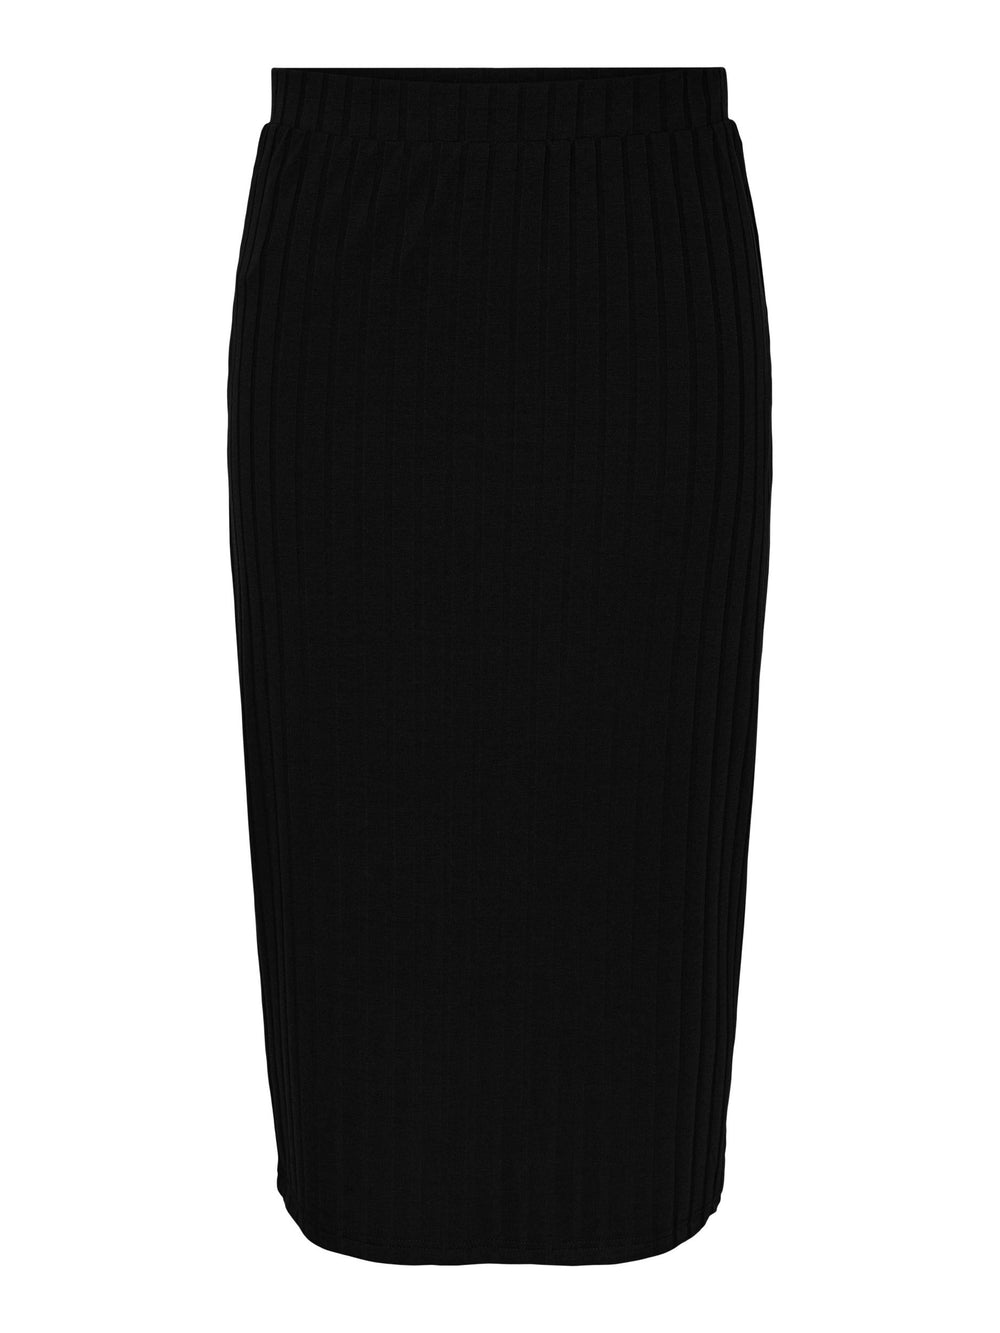 PCSAVORA Black Pencil Skirt